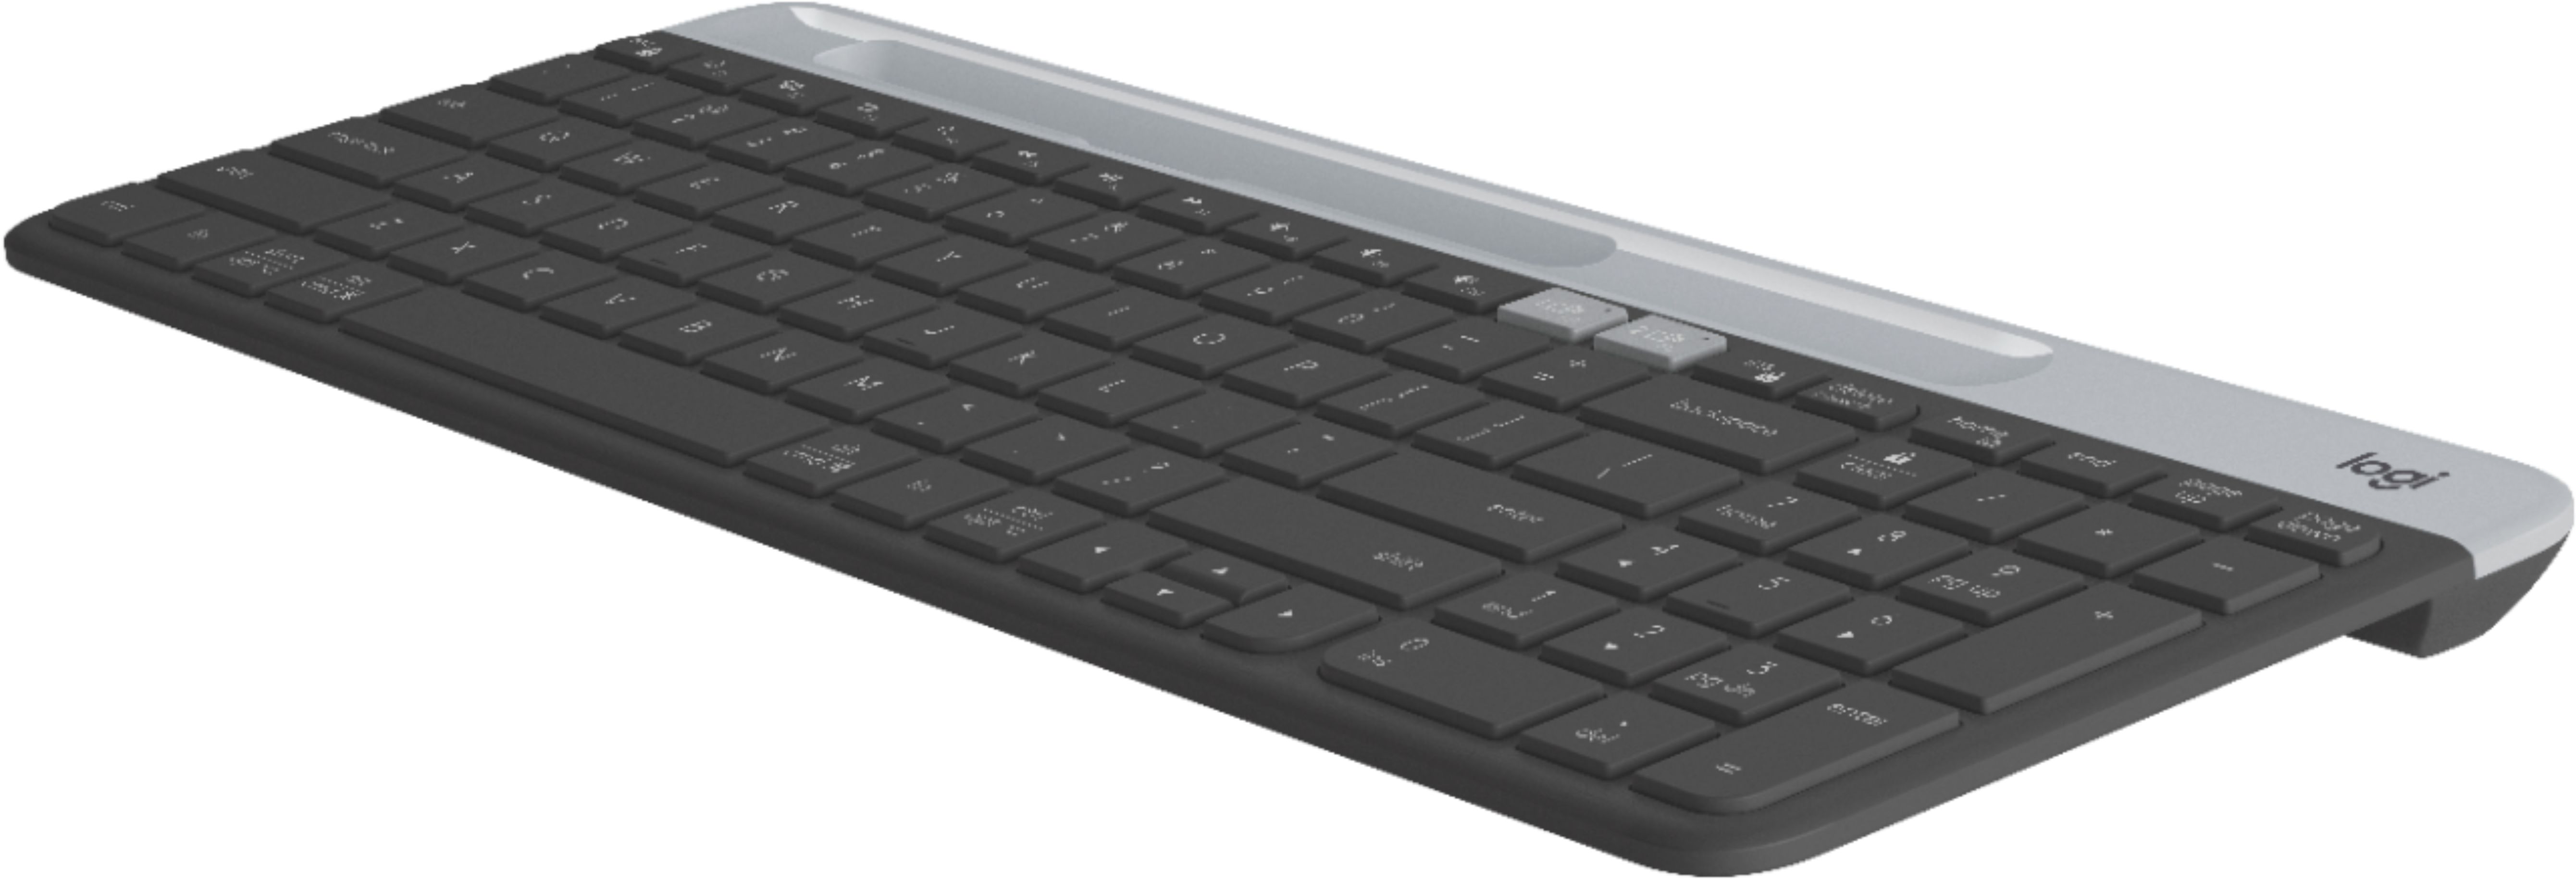 Left View: Logitech - K380 TKL Wireless Bluetooth Scissor Keyboard for Mac with Compact Slim Profile - Off-White